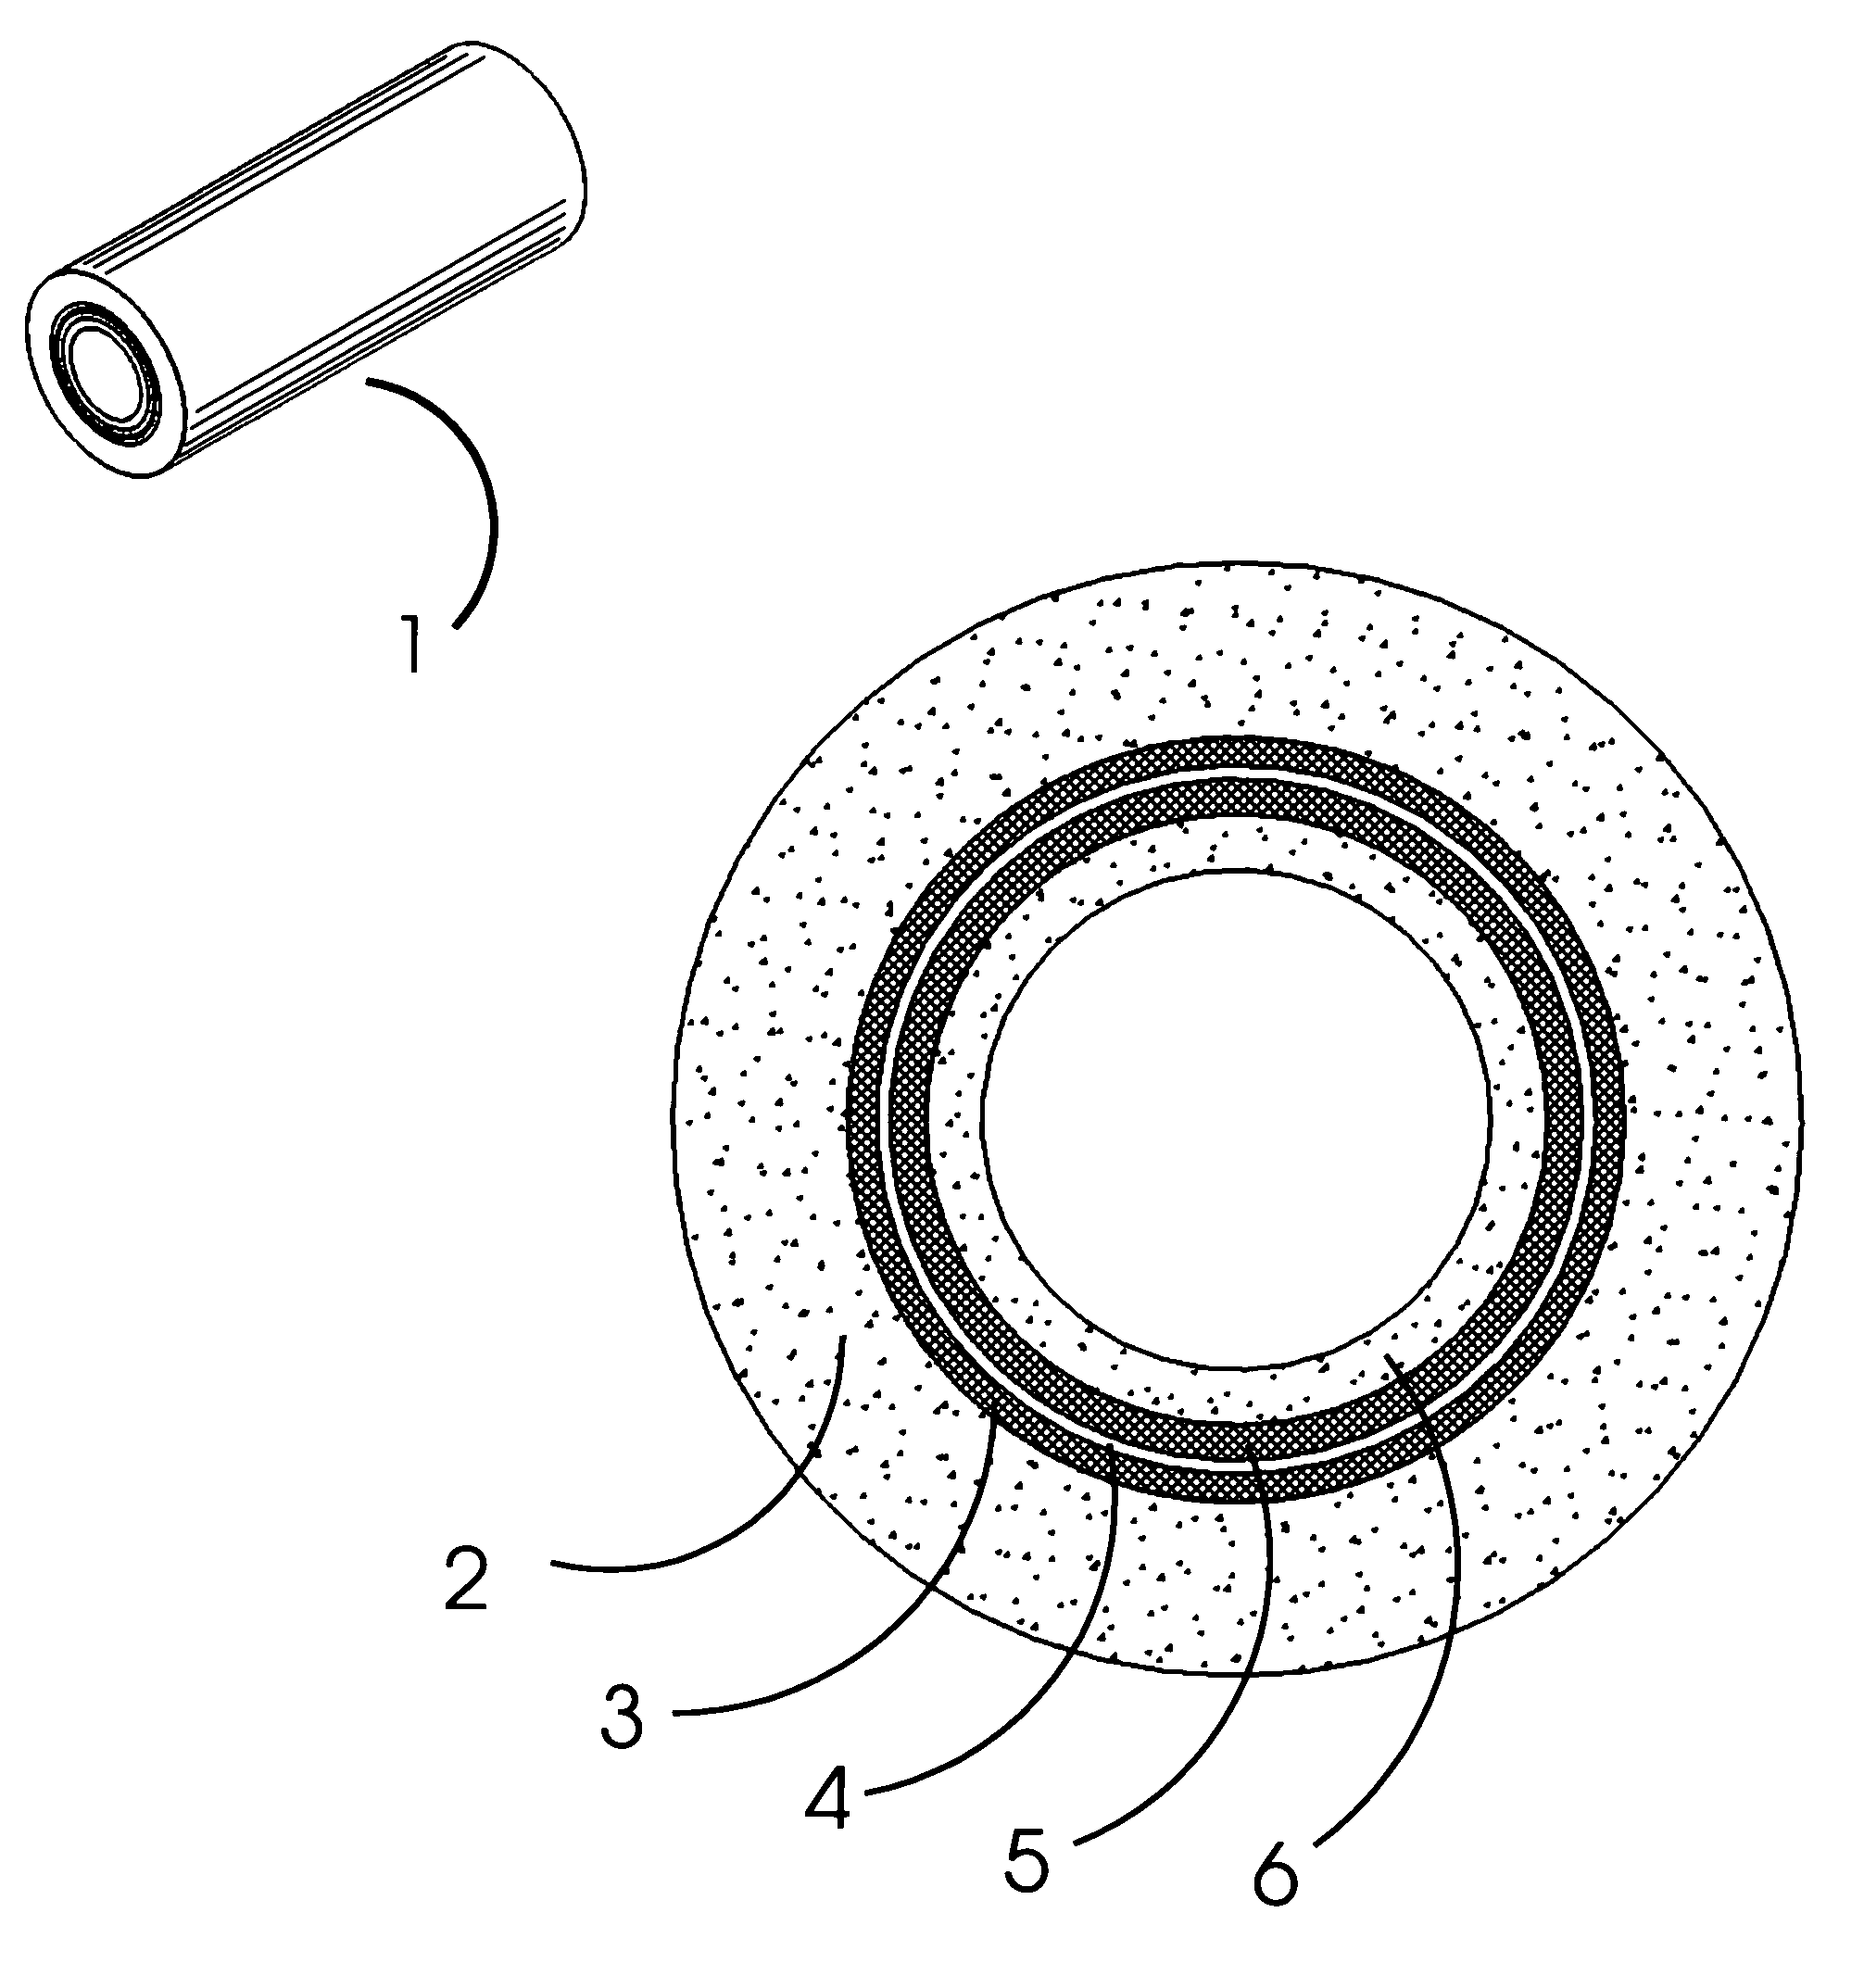 Porous bi-tubular solid state electrochemical device